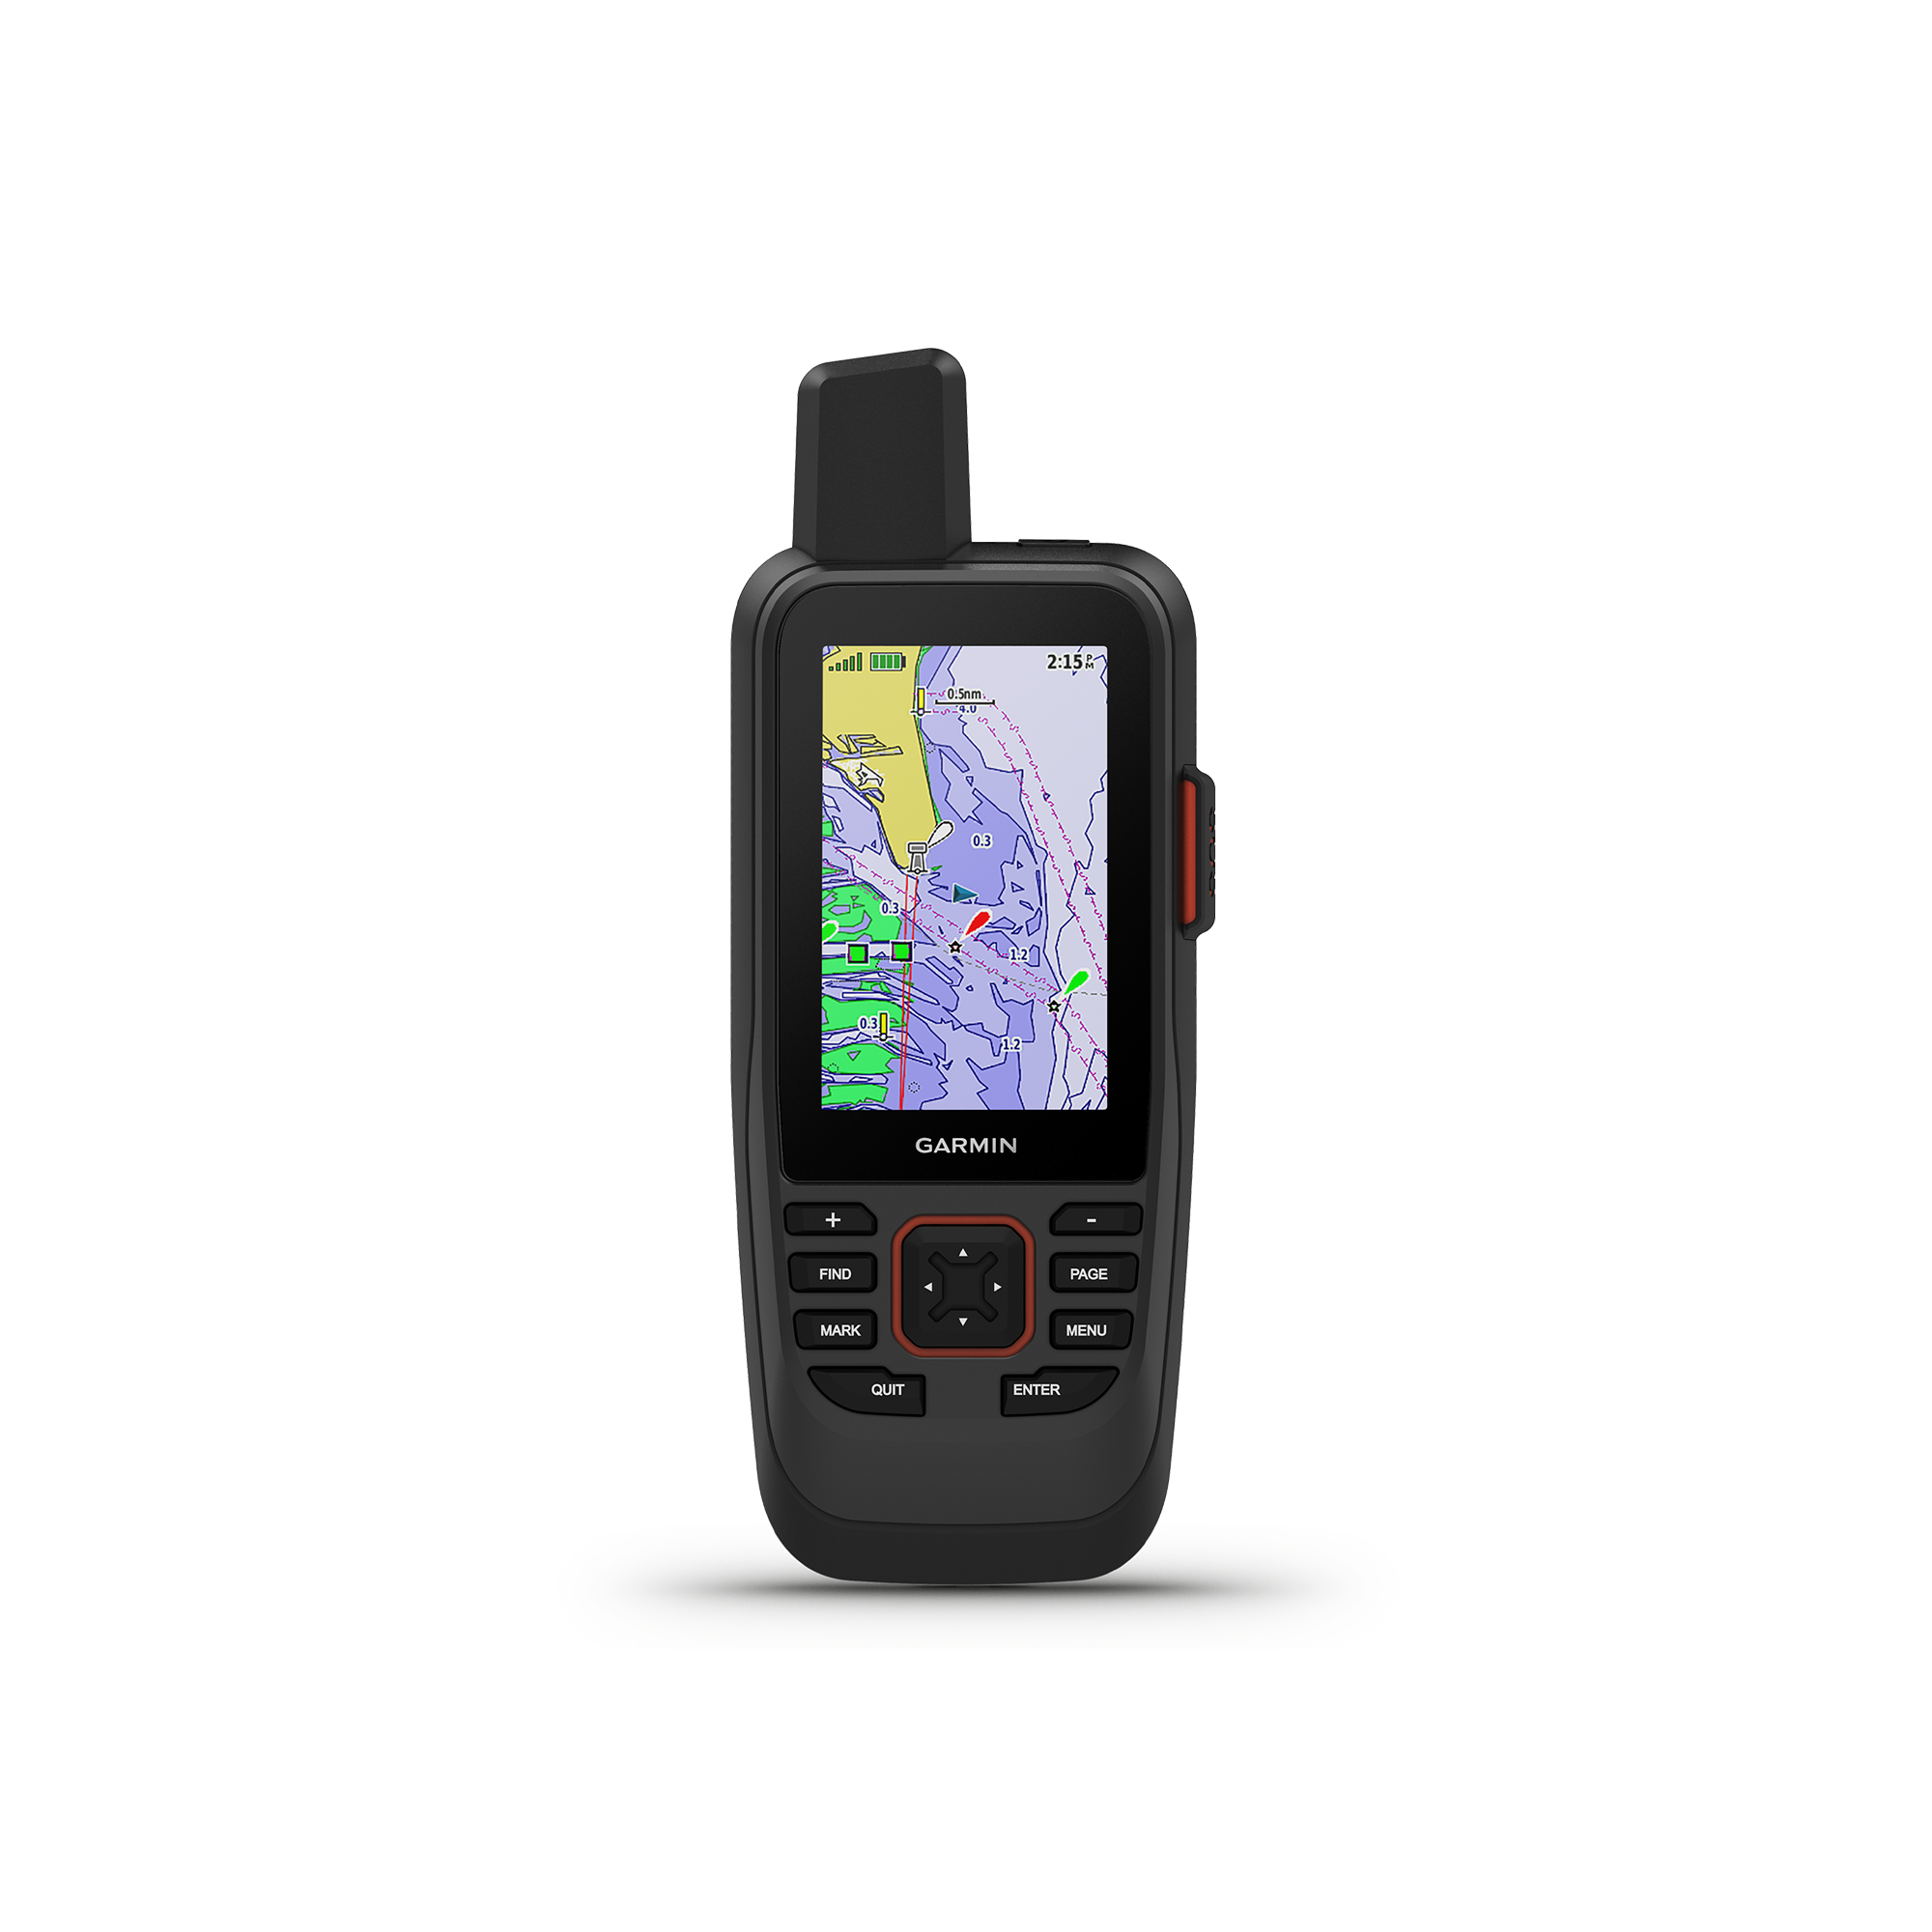 Garmin GPSMAP 78, 79 & 86 Series Comparison | GPS Central GPS Central